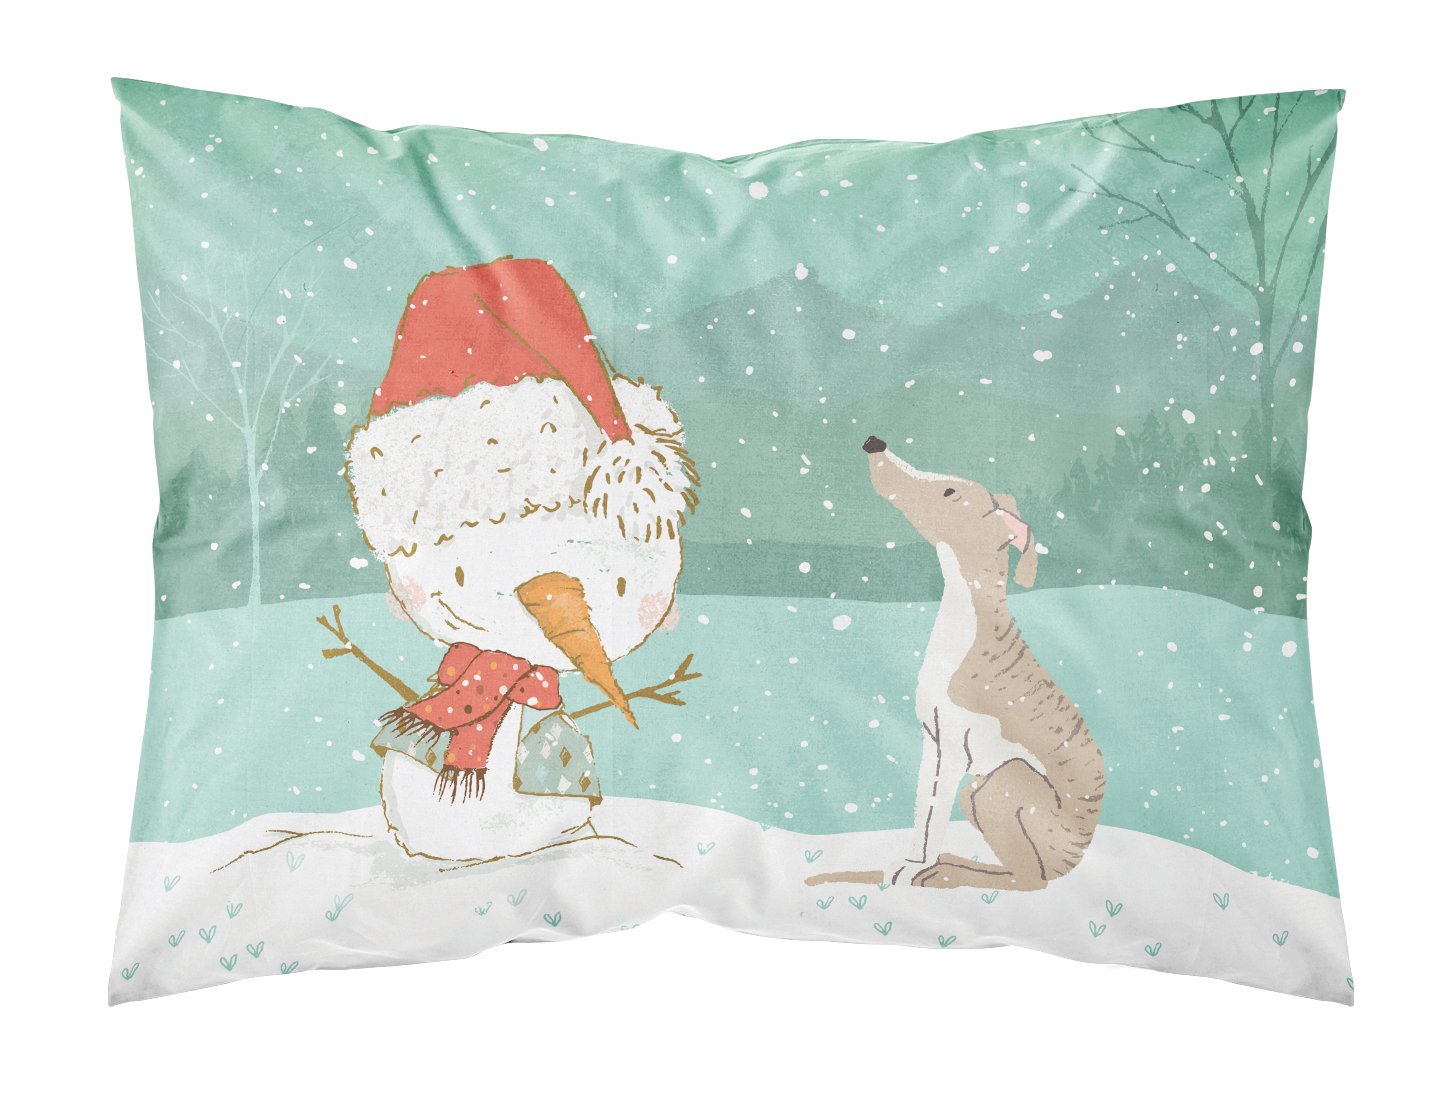 Whippet Snowman Christmas Fabric Standard Pillowcase CK2079PILLOWCASE by Caroline's Treasures